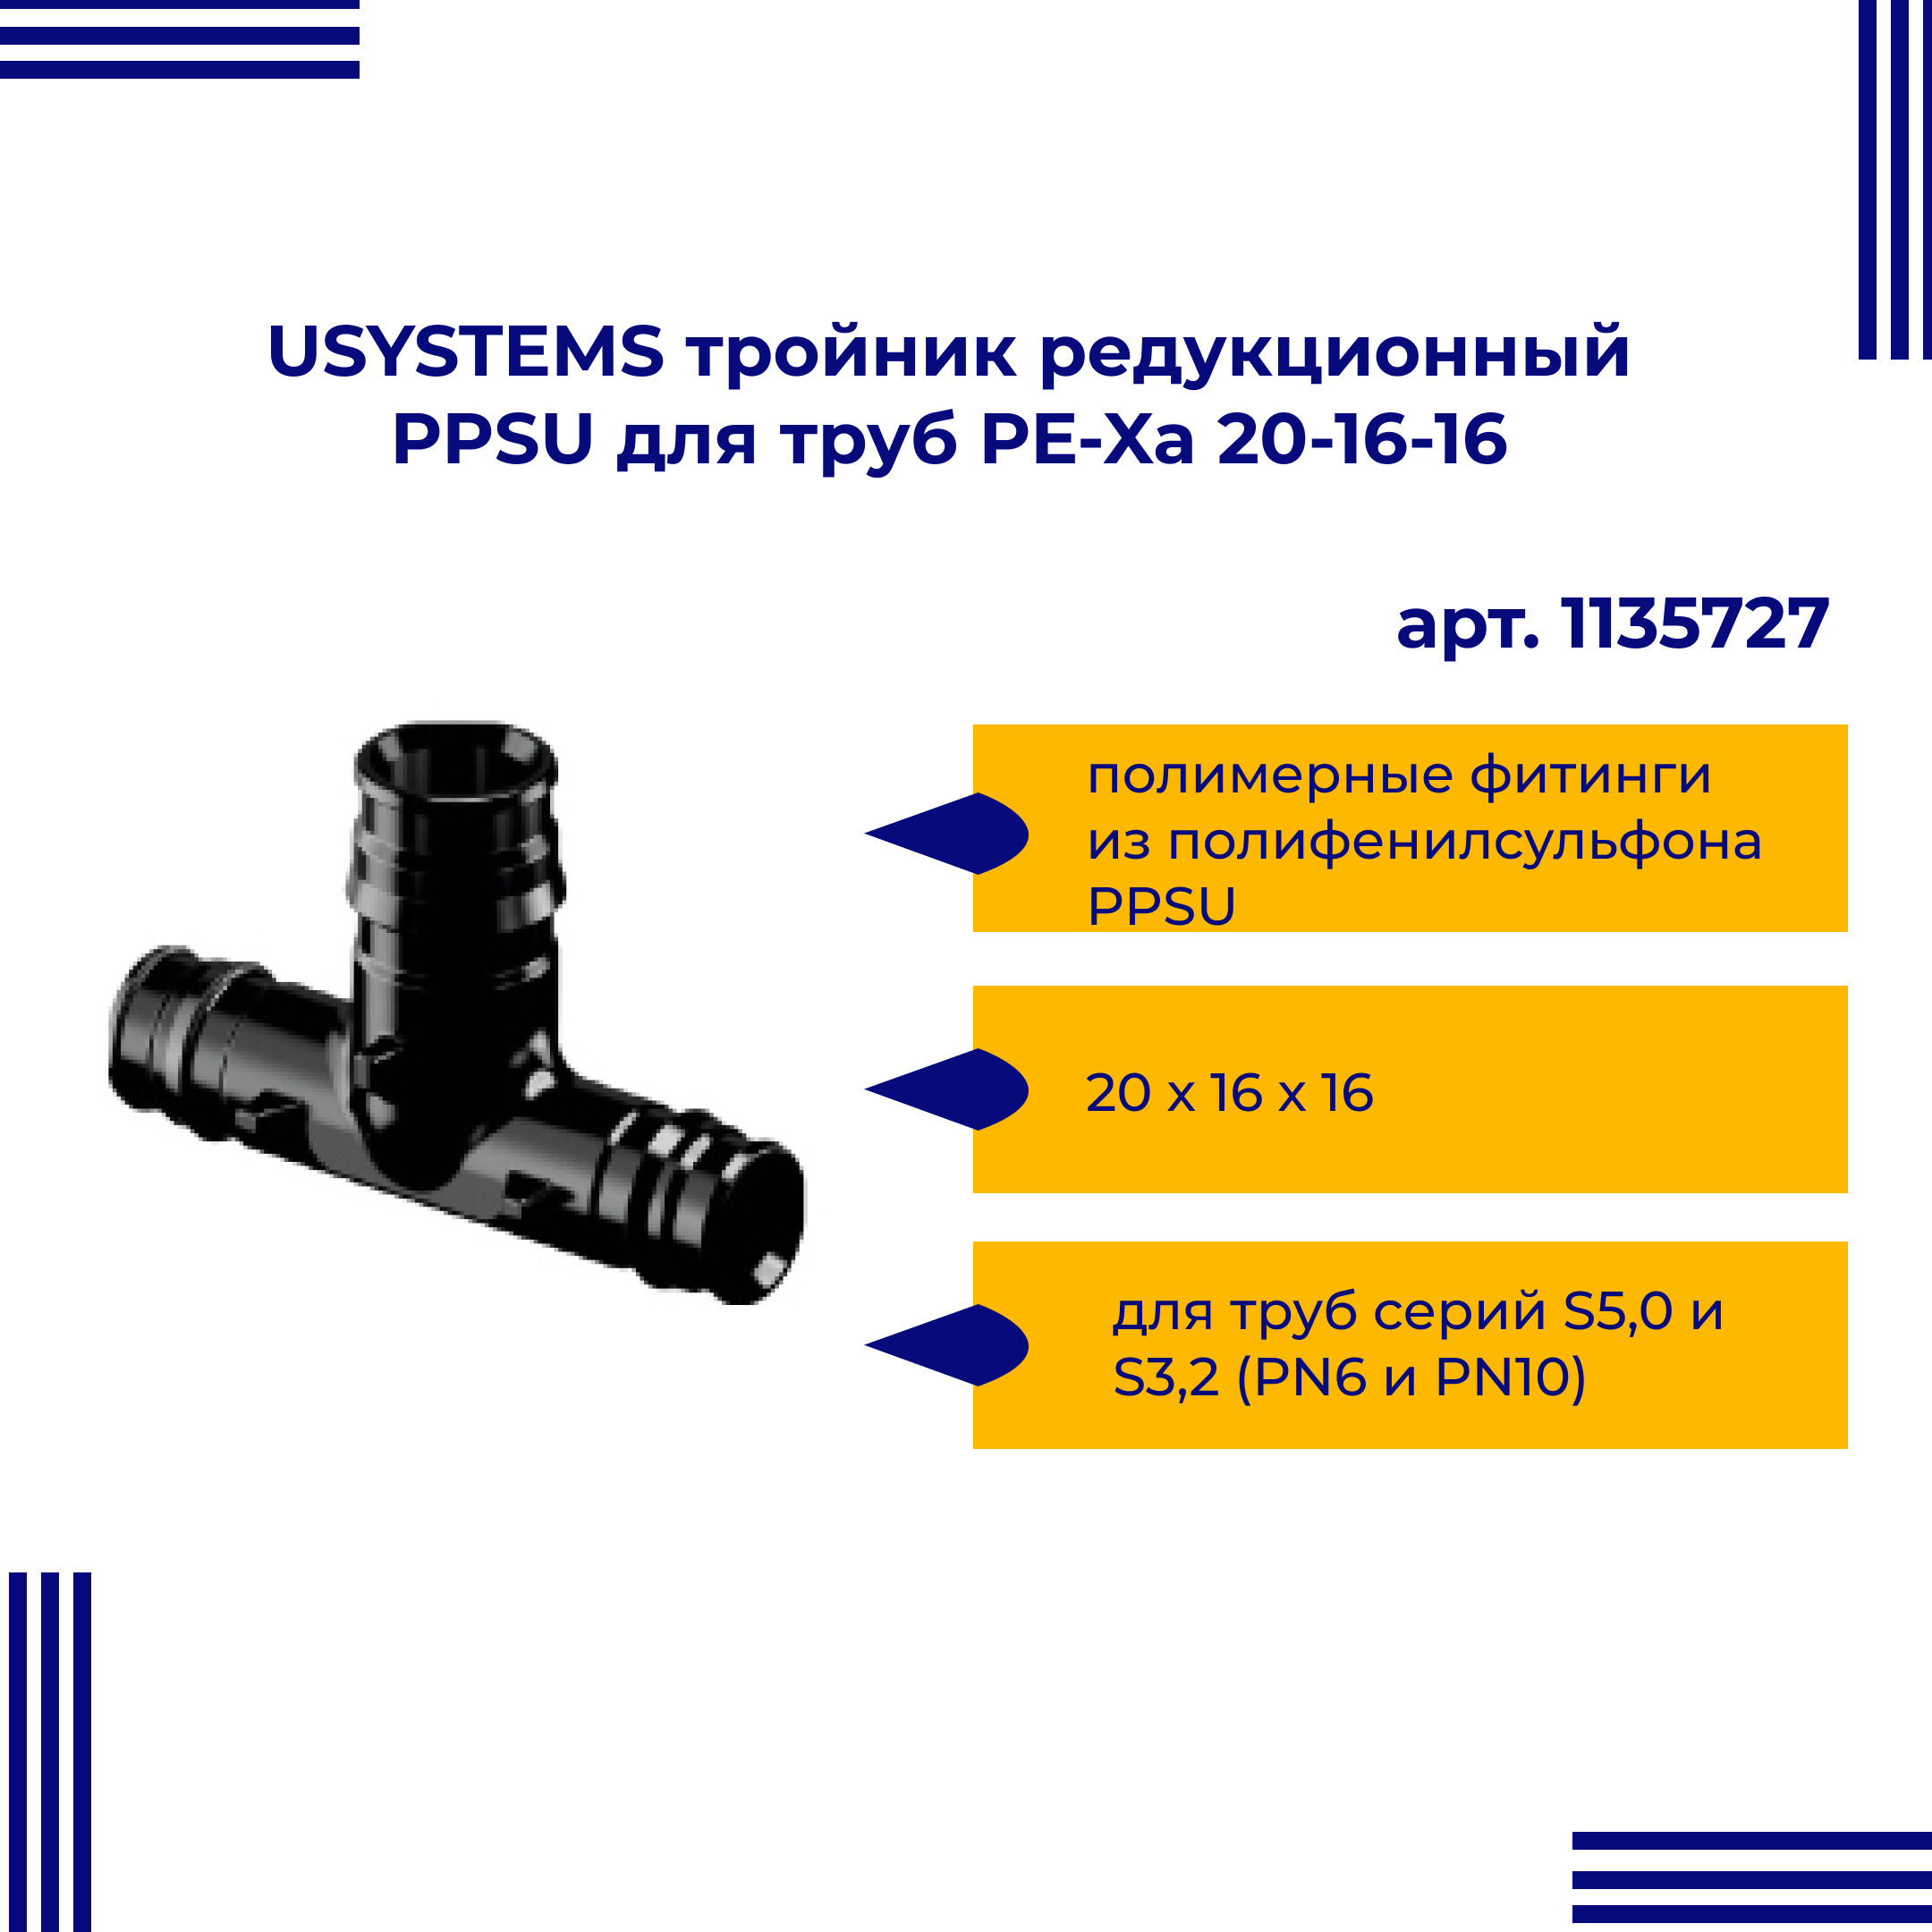 Тройник PPSU USYSTEMS редукционный для труб PE-Xa 20-16-16 1135727